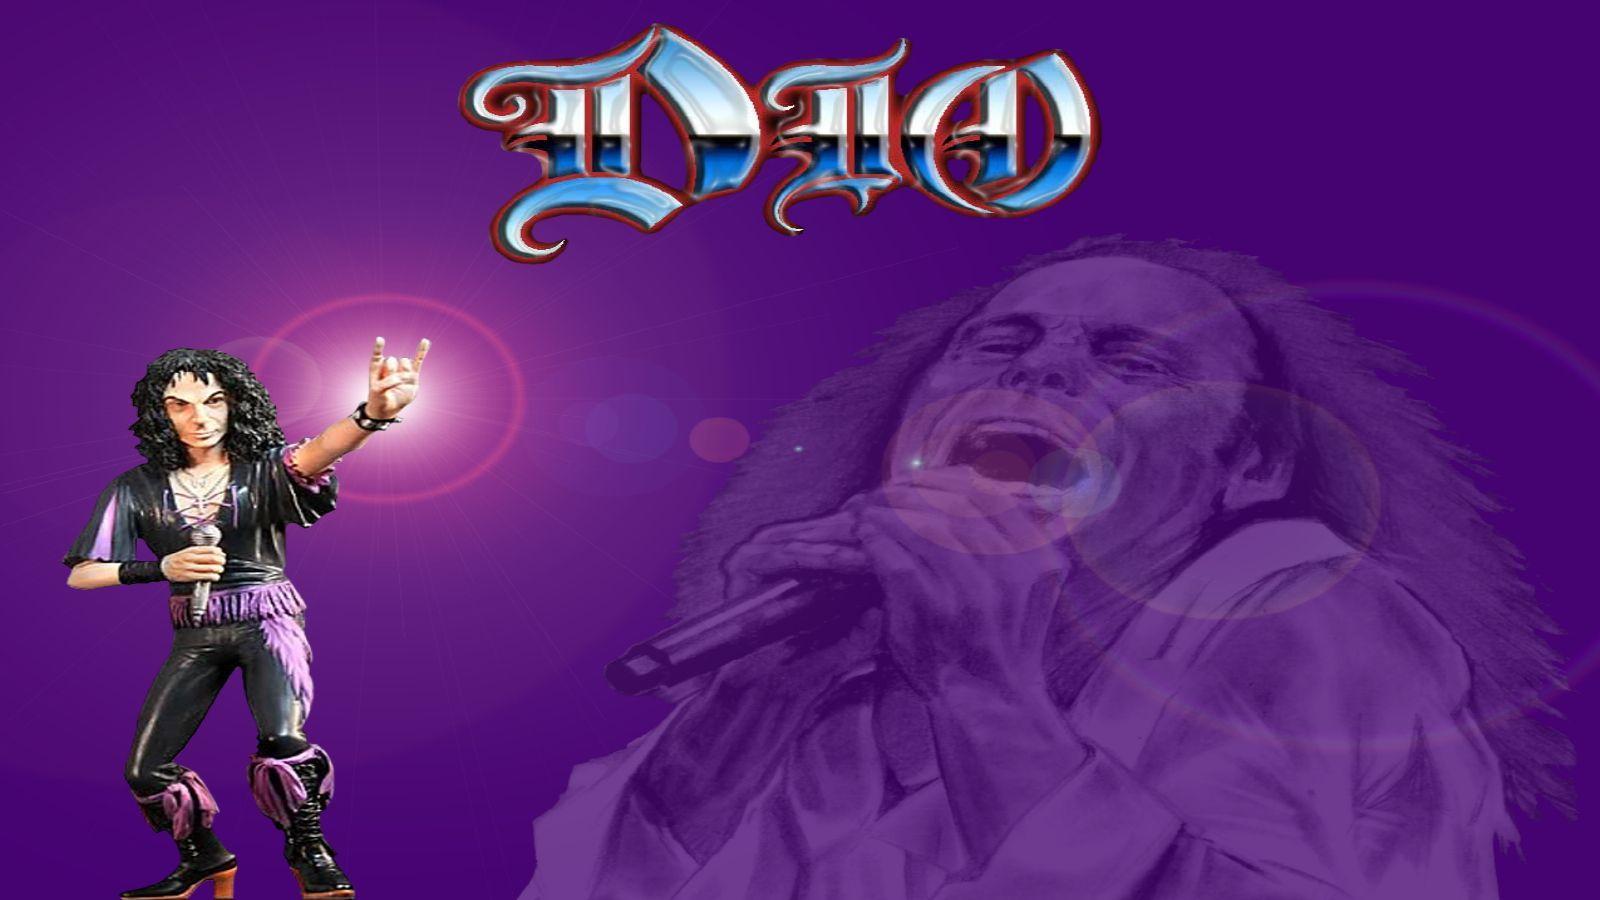 Ronnie James Dio Computer Wallpaper, Desktop Background